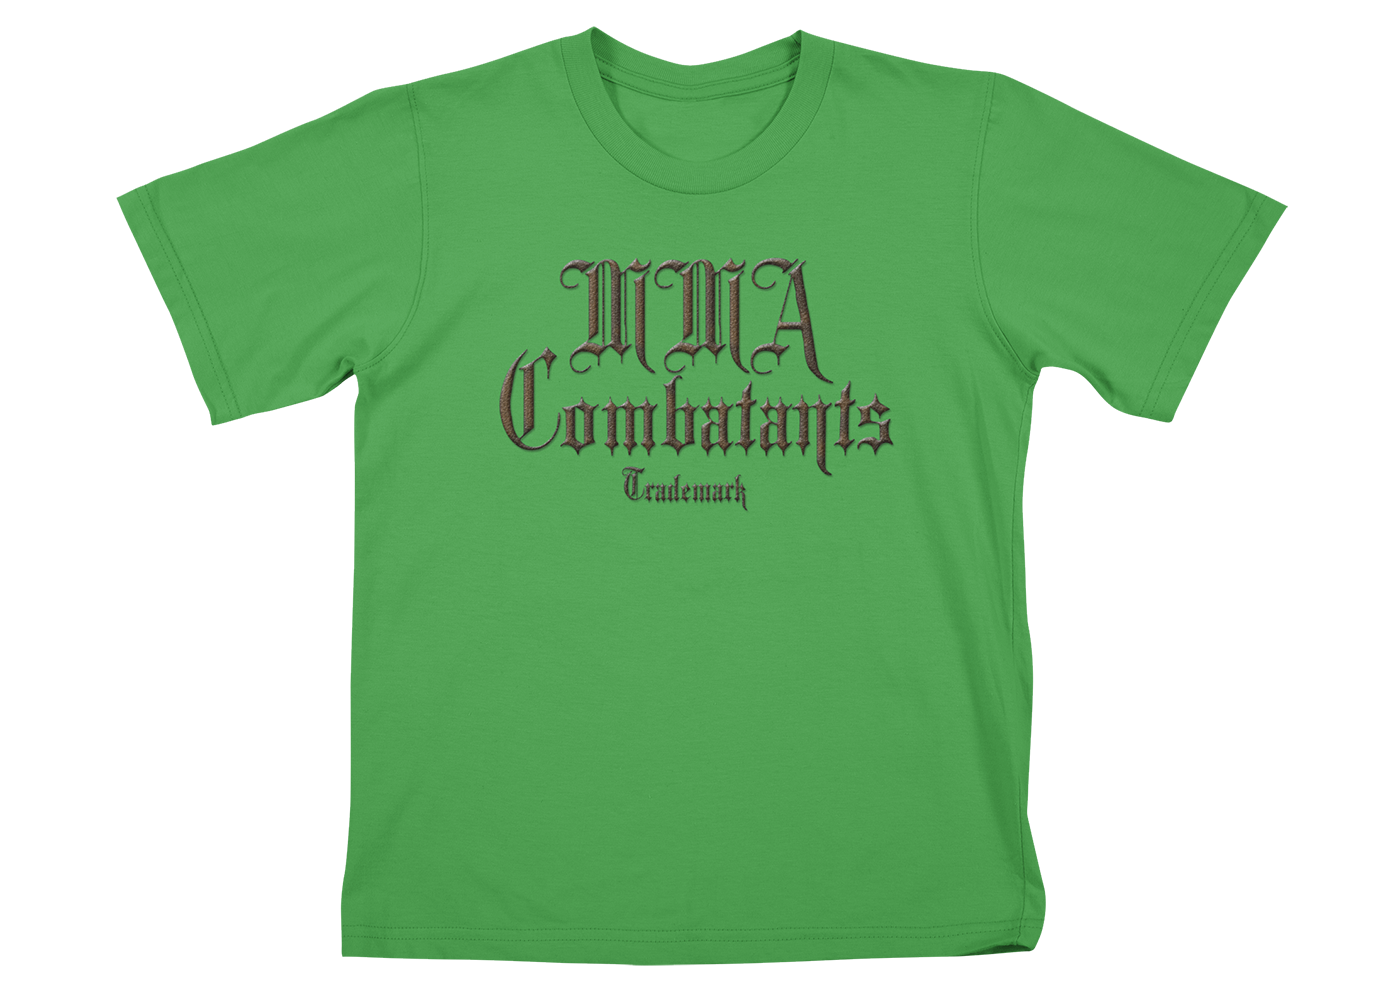 MMA Combatants - Trademark Logo on a Kid's Green T-Shirt